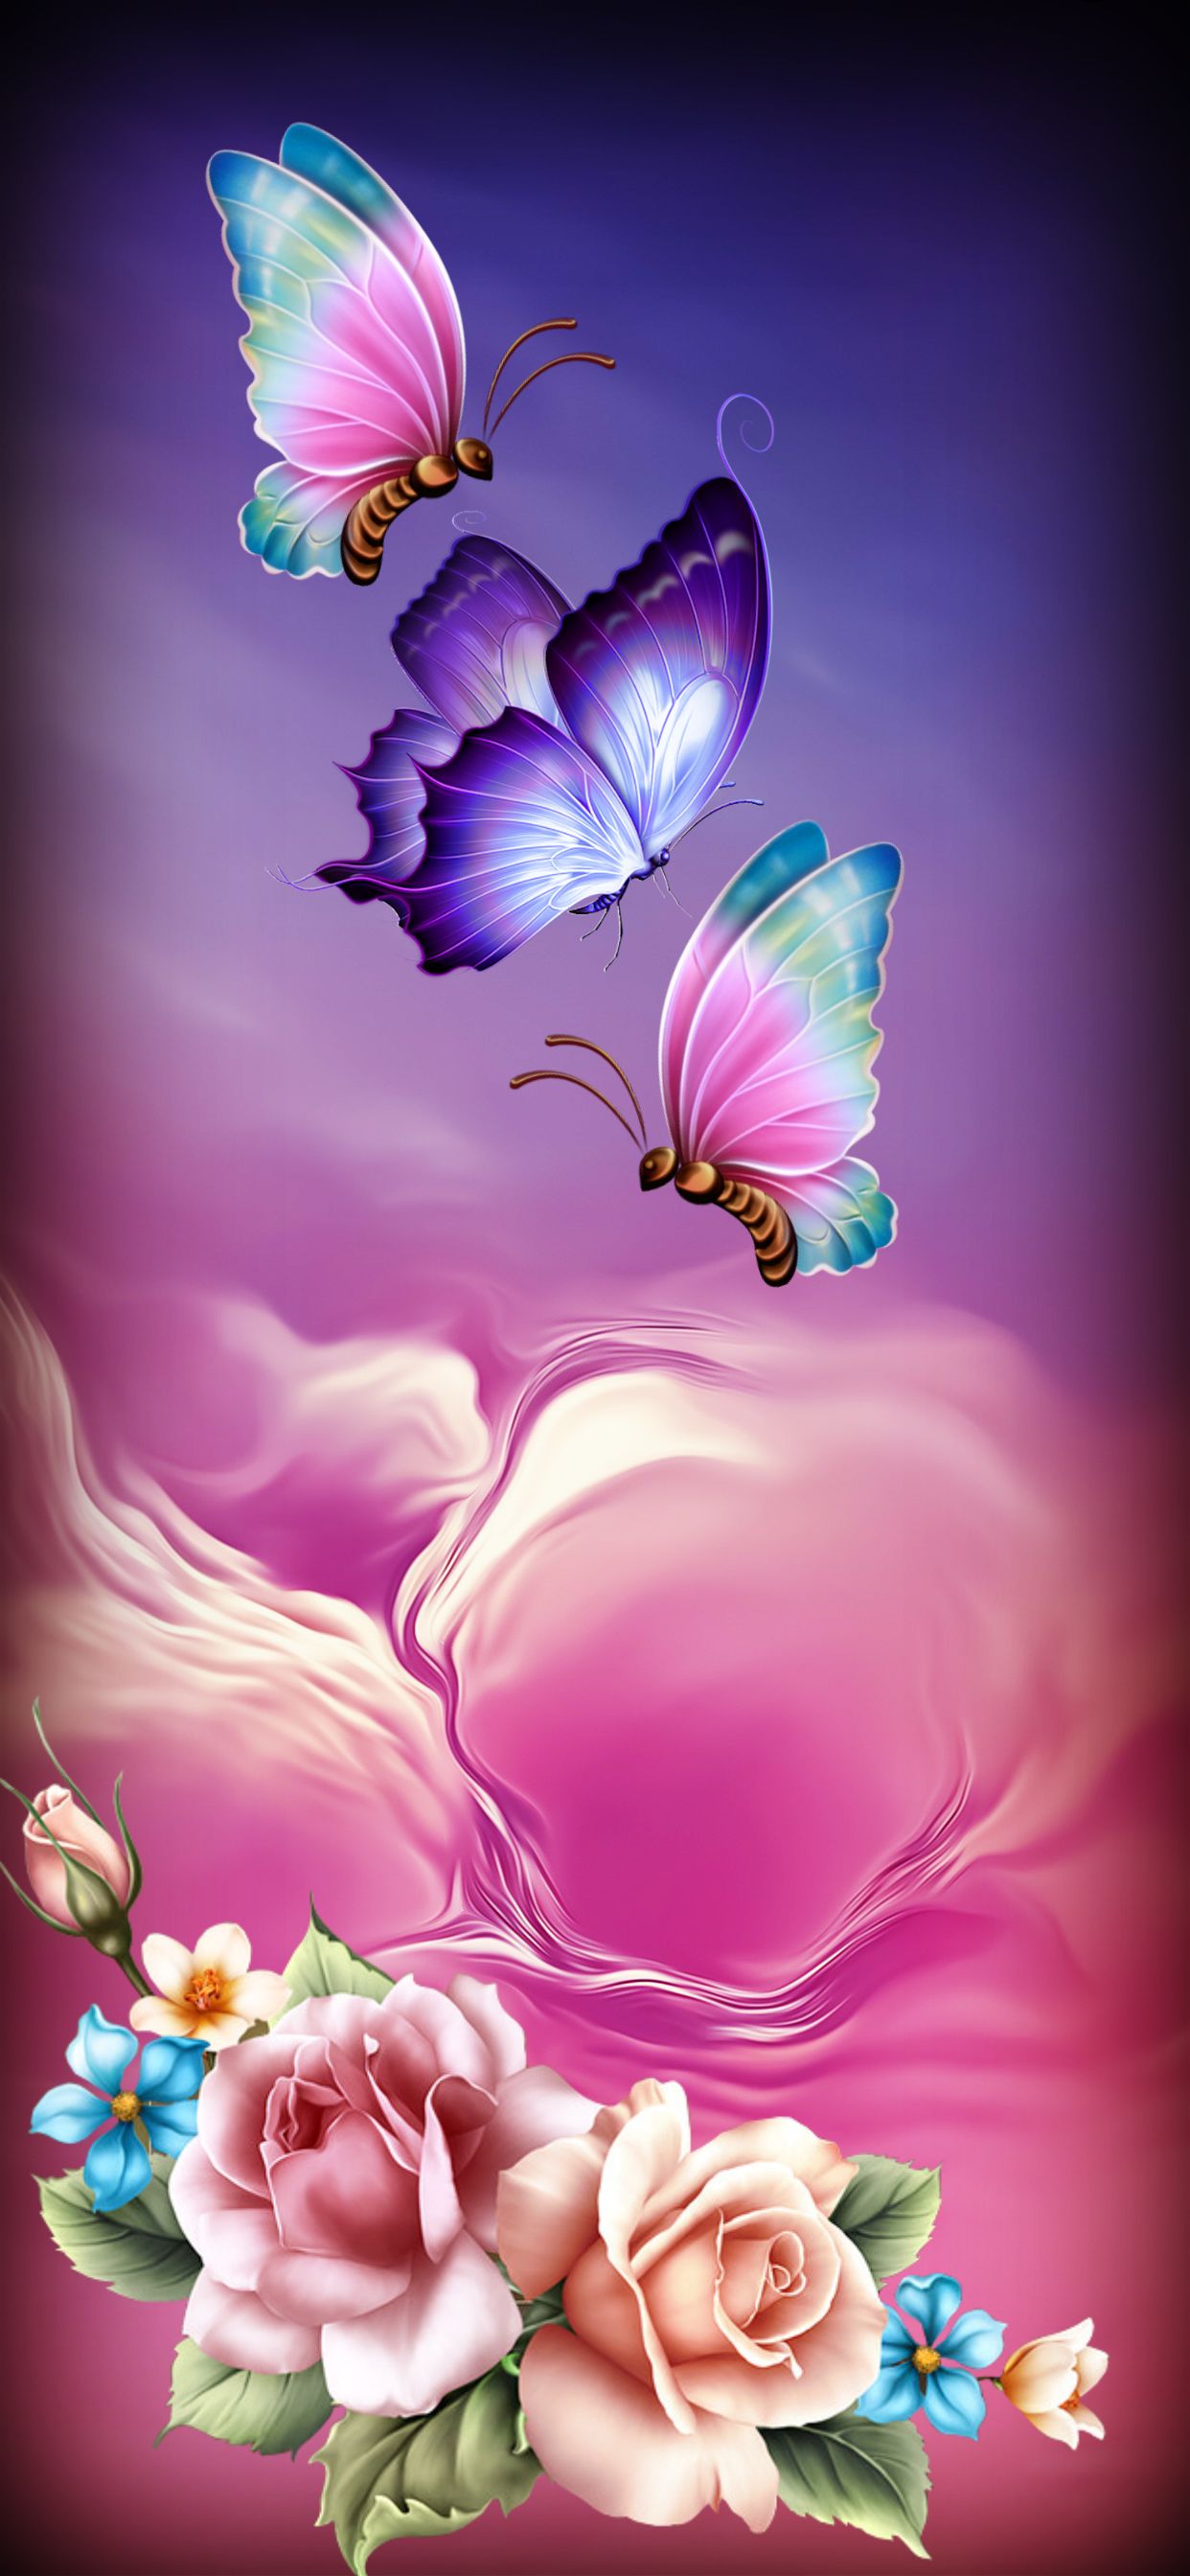 Wallpaper With Butterflies Wallpapers